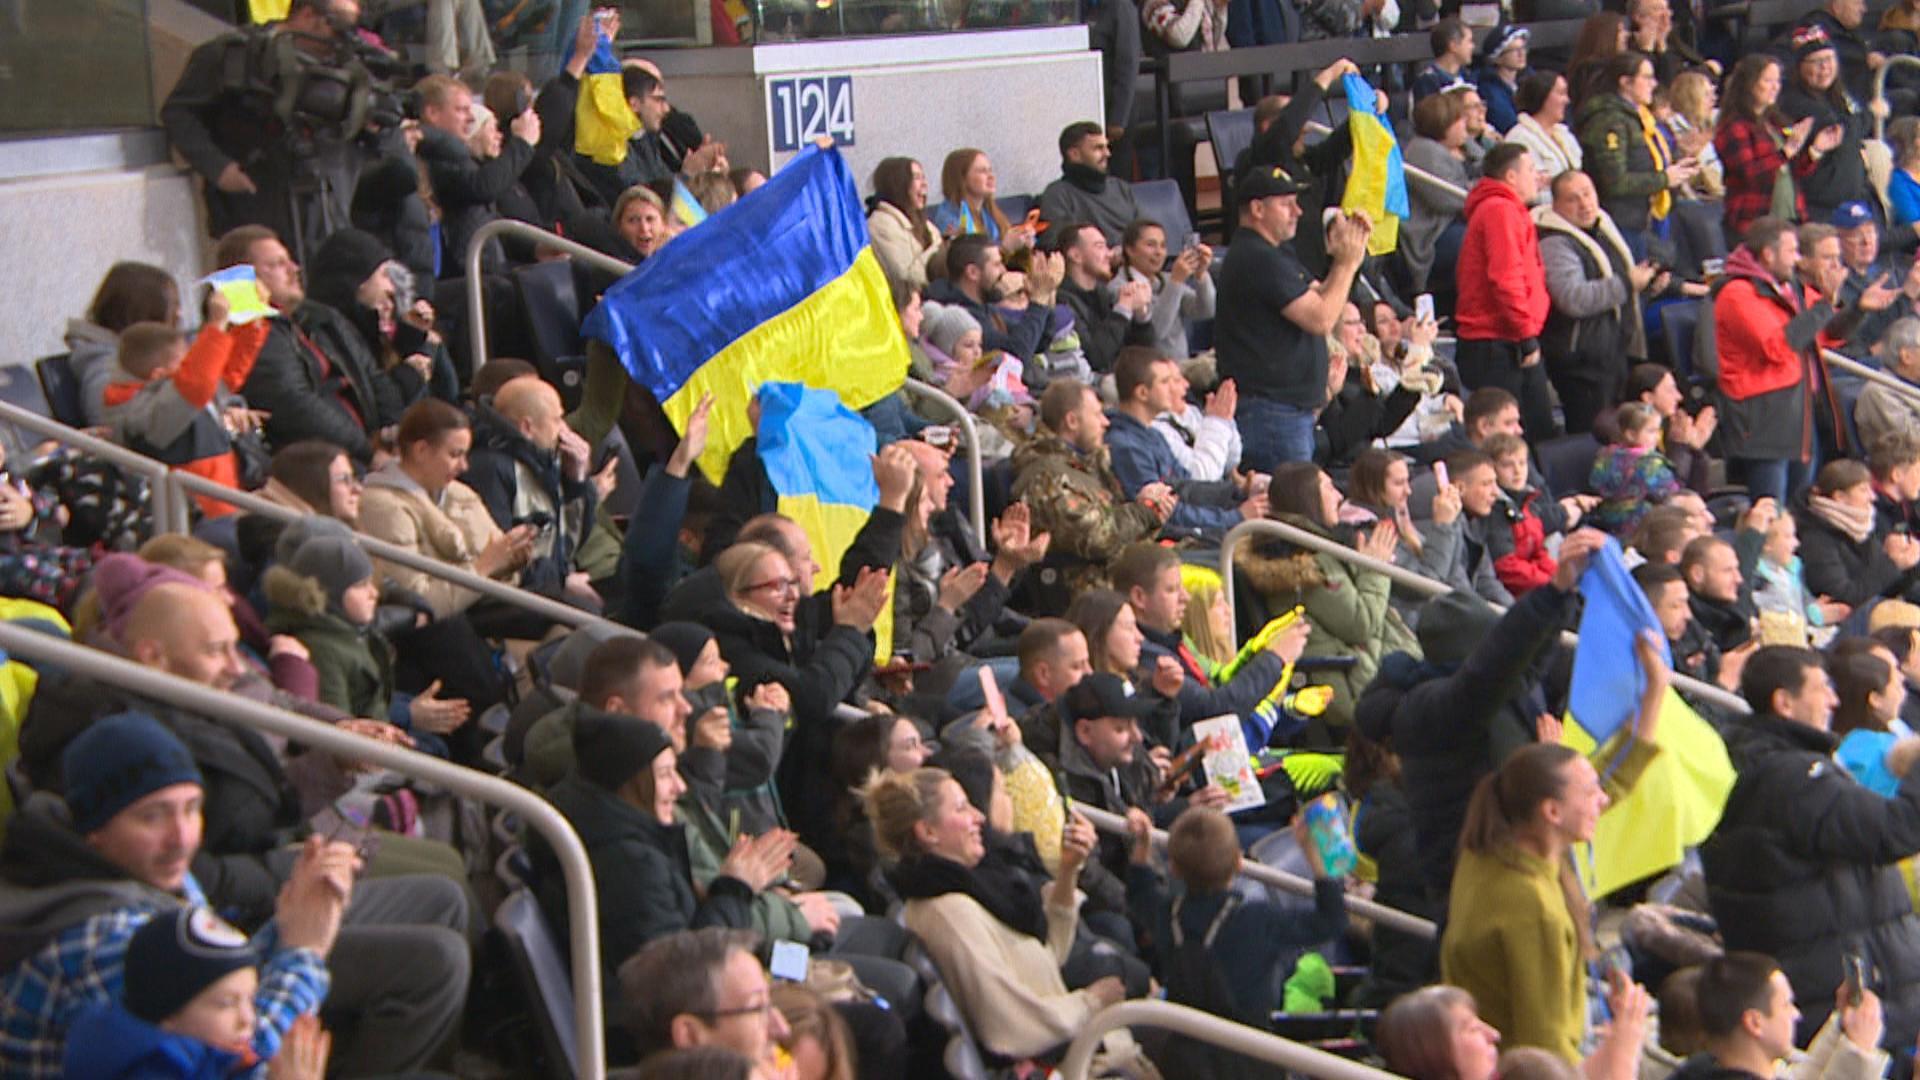 De jeunes ukrainiens arriveront bientôt au Tournoi de hockey pee-wee de Québec
De jeunes ukrainiens arriveront bientôt au Tournoi de hockey pee-wee de Québec